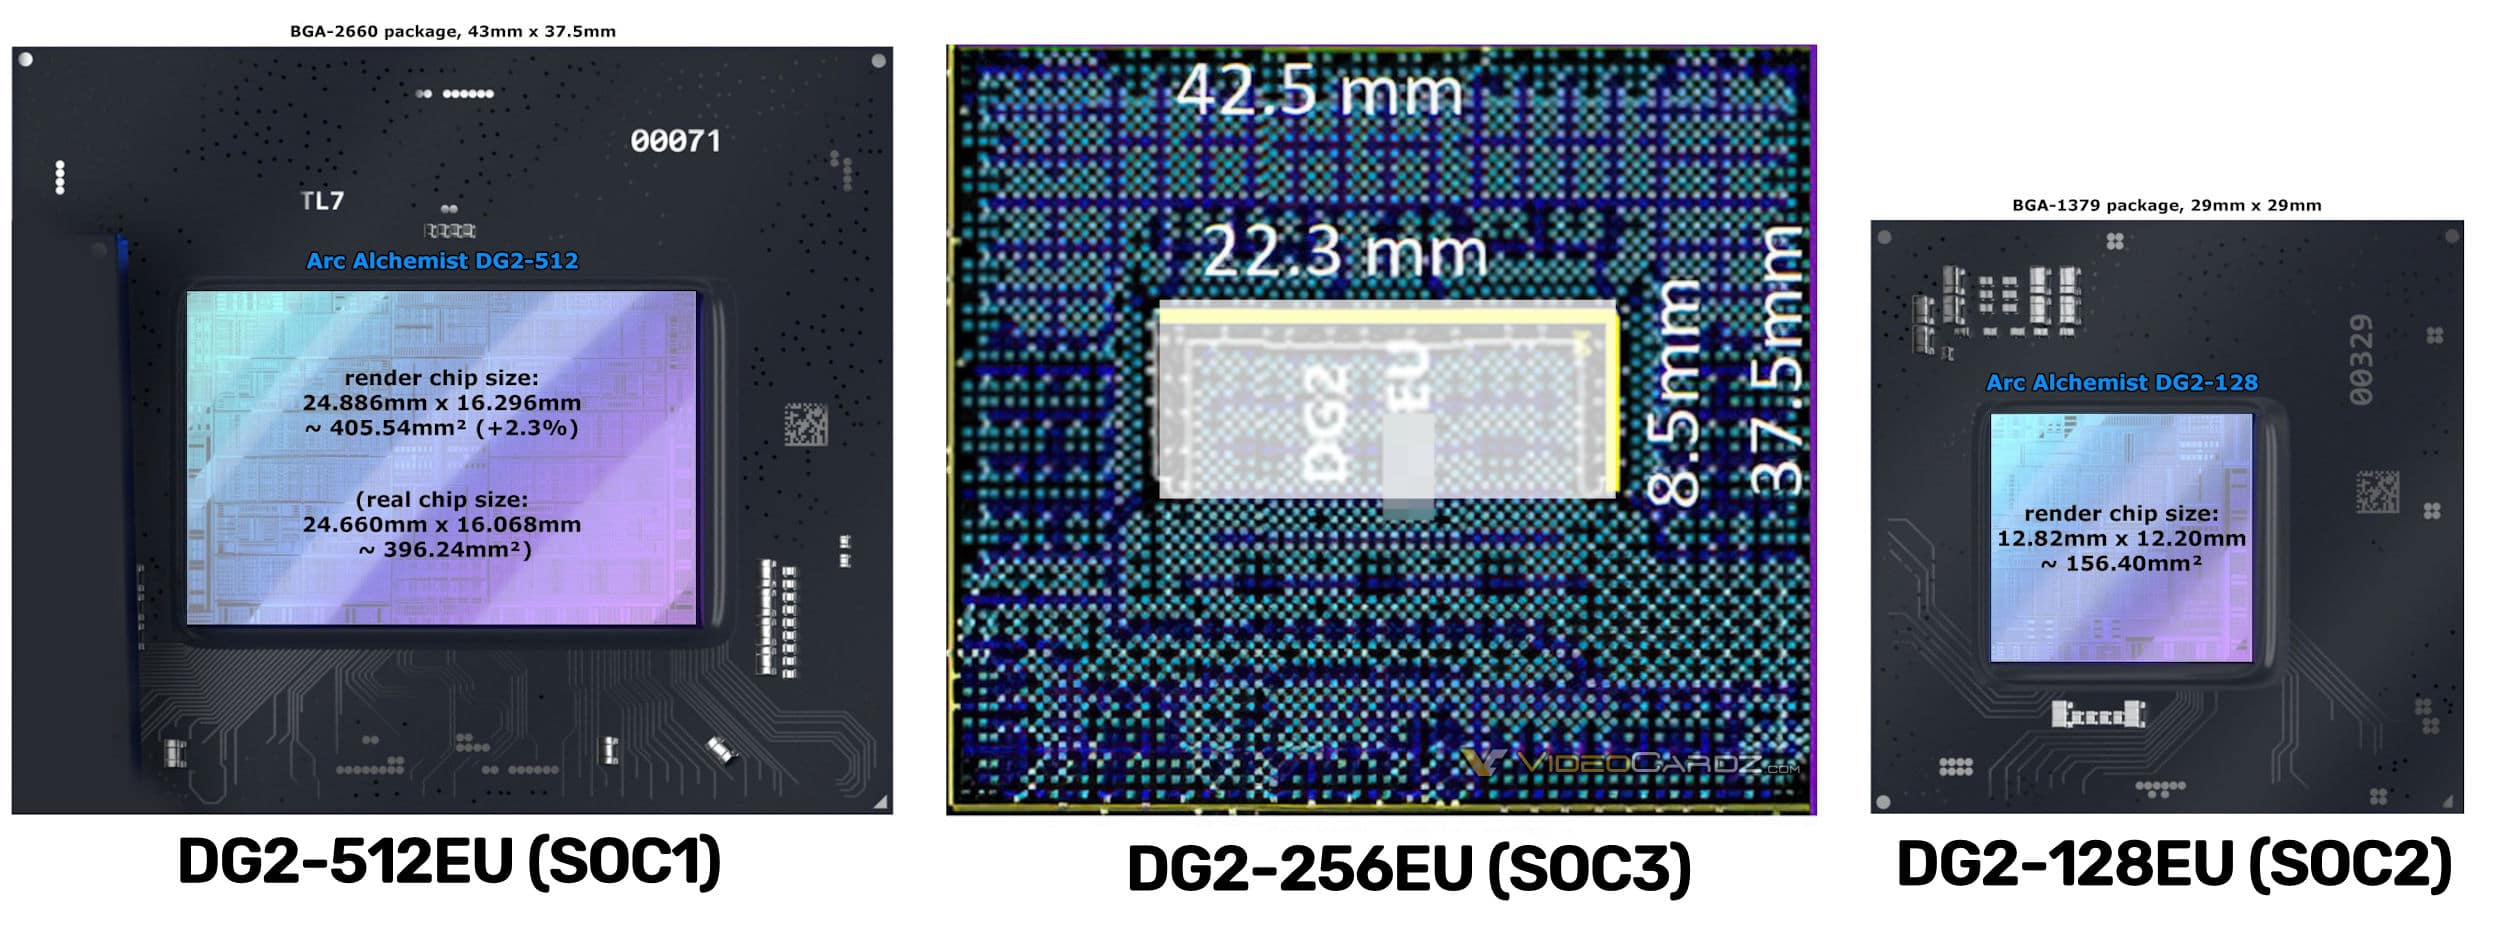 The third DG2 GPU variant on the horizon: DG2-256

